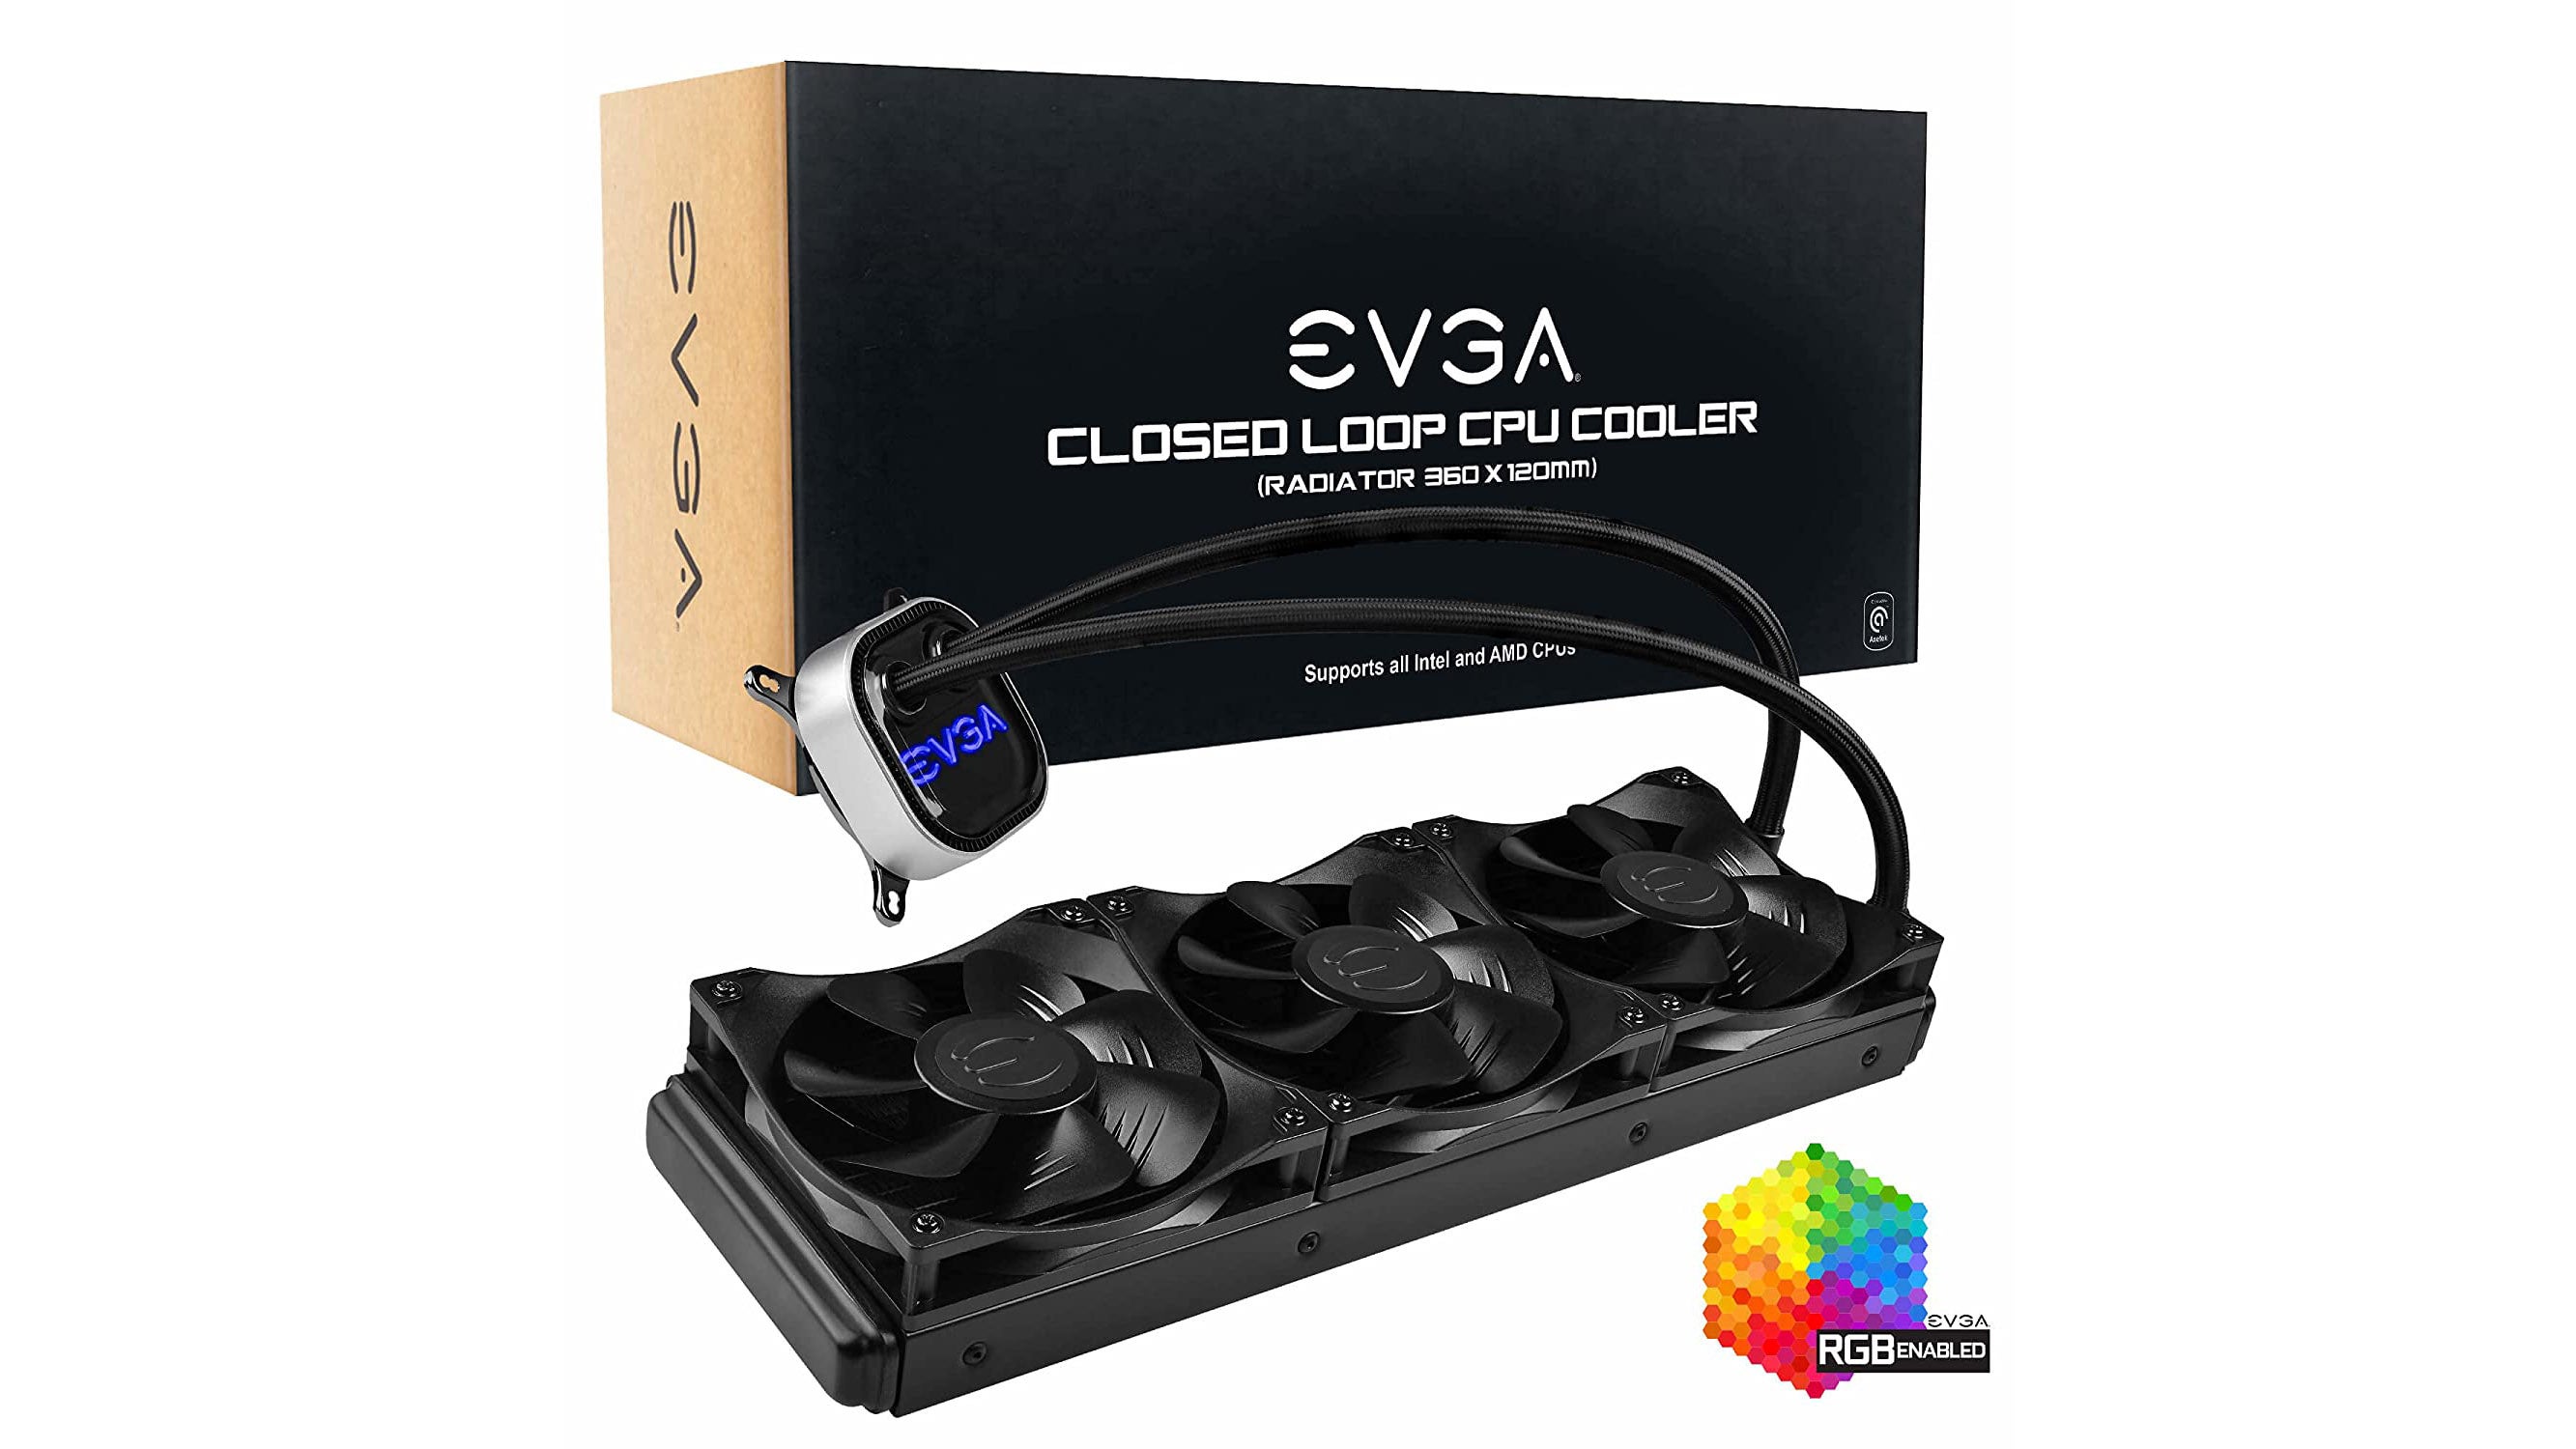 the evga clc 360mm is a triple-fan aio liquid cpu cooler, shown with its box and a subtle RGB pump.